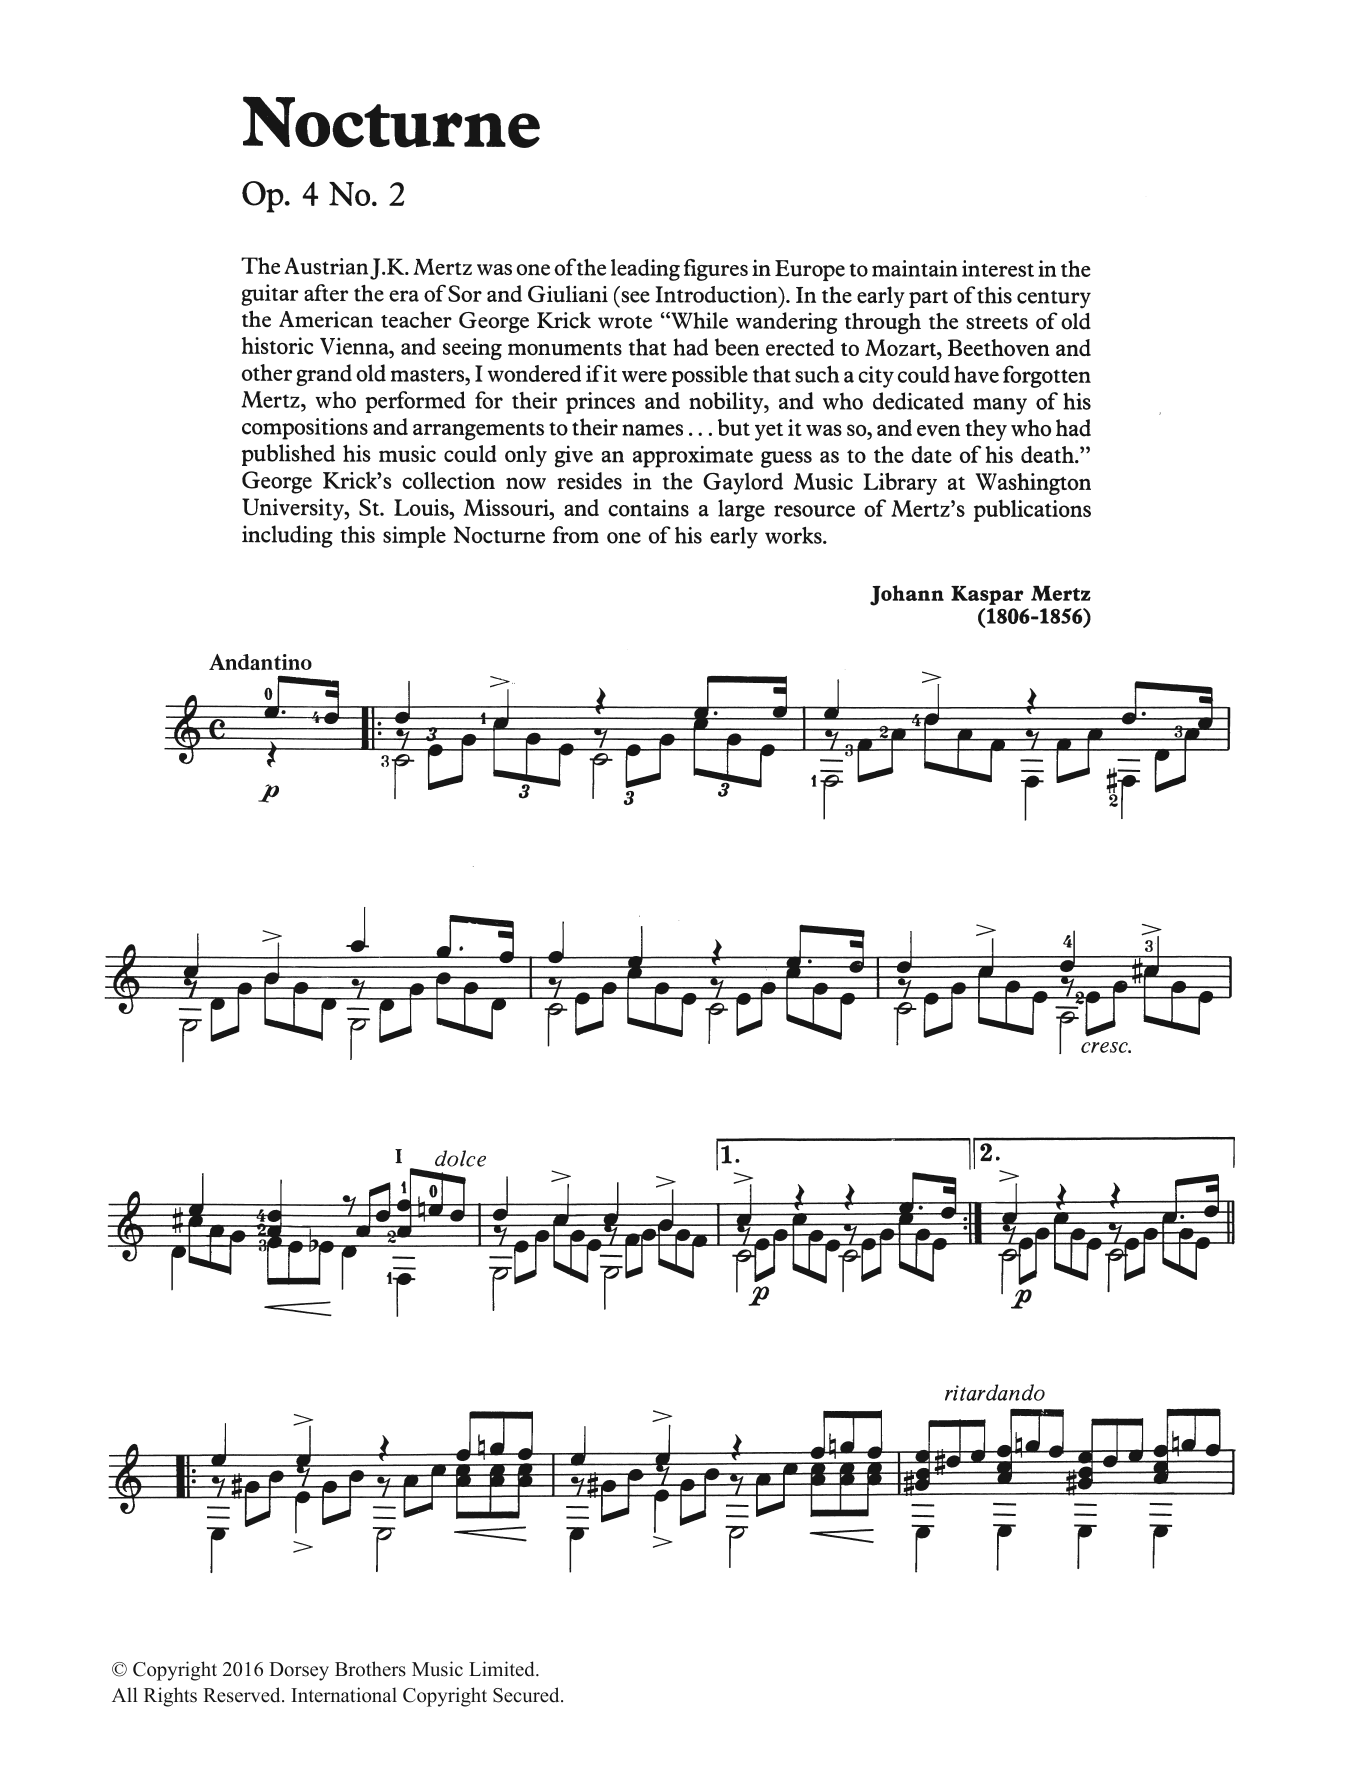 Download Johann Kaspar Mertz Nocturne Sheet Music and learn how to play Guitar PDF digital score in minutes